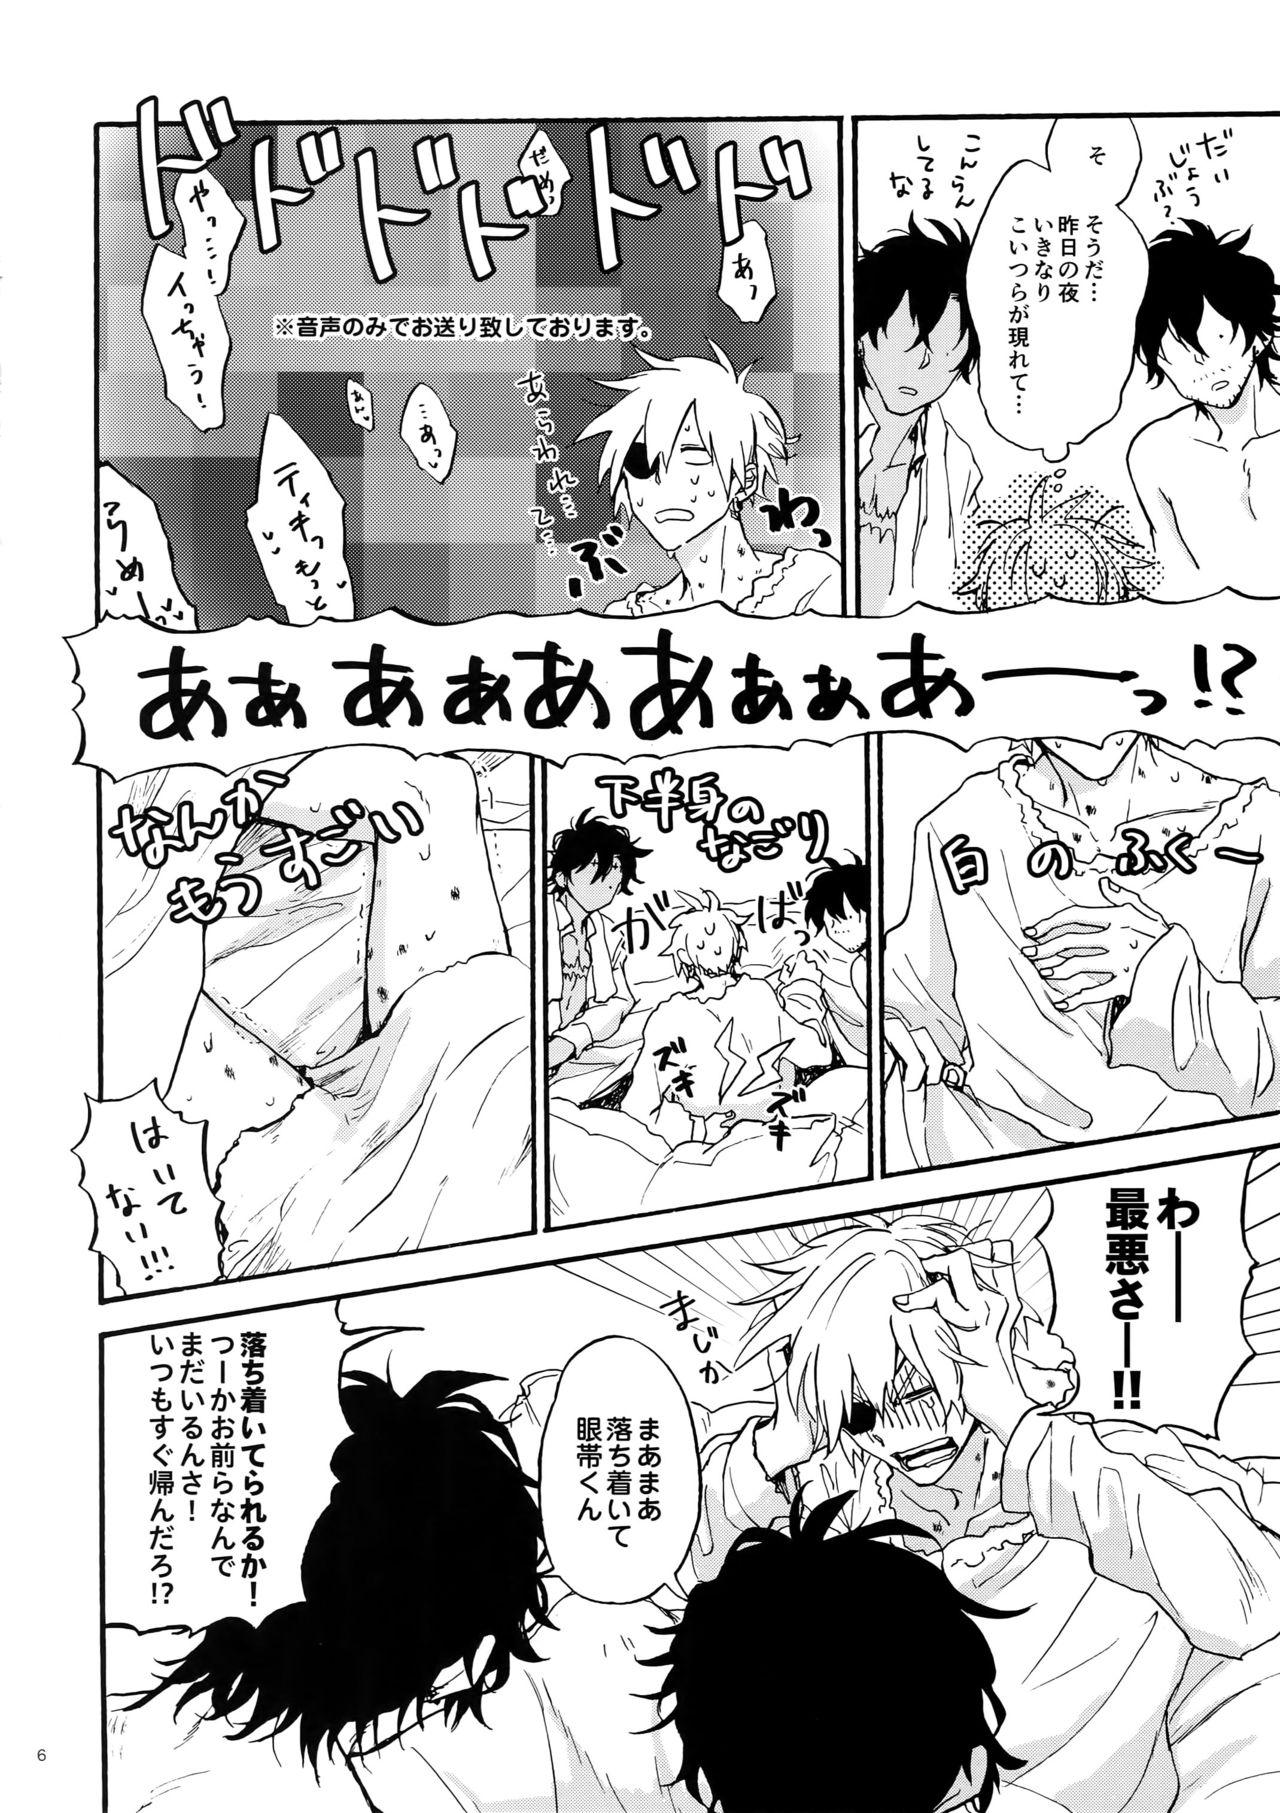 Phat Ass Shiro to Kuro to ore - D.gray man Amatuer - Page 5